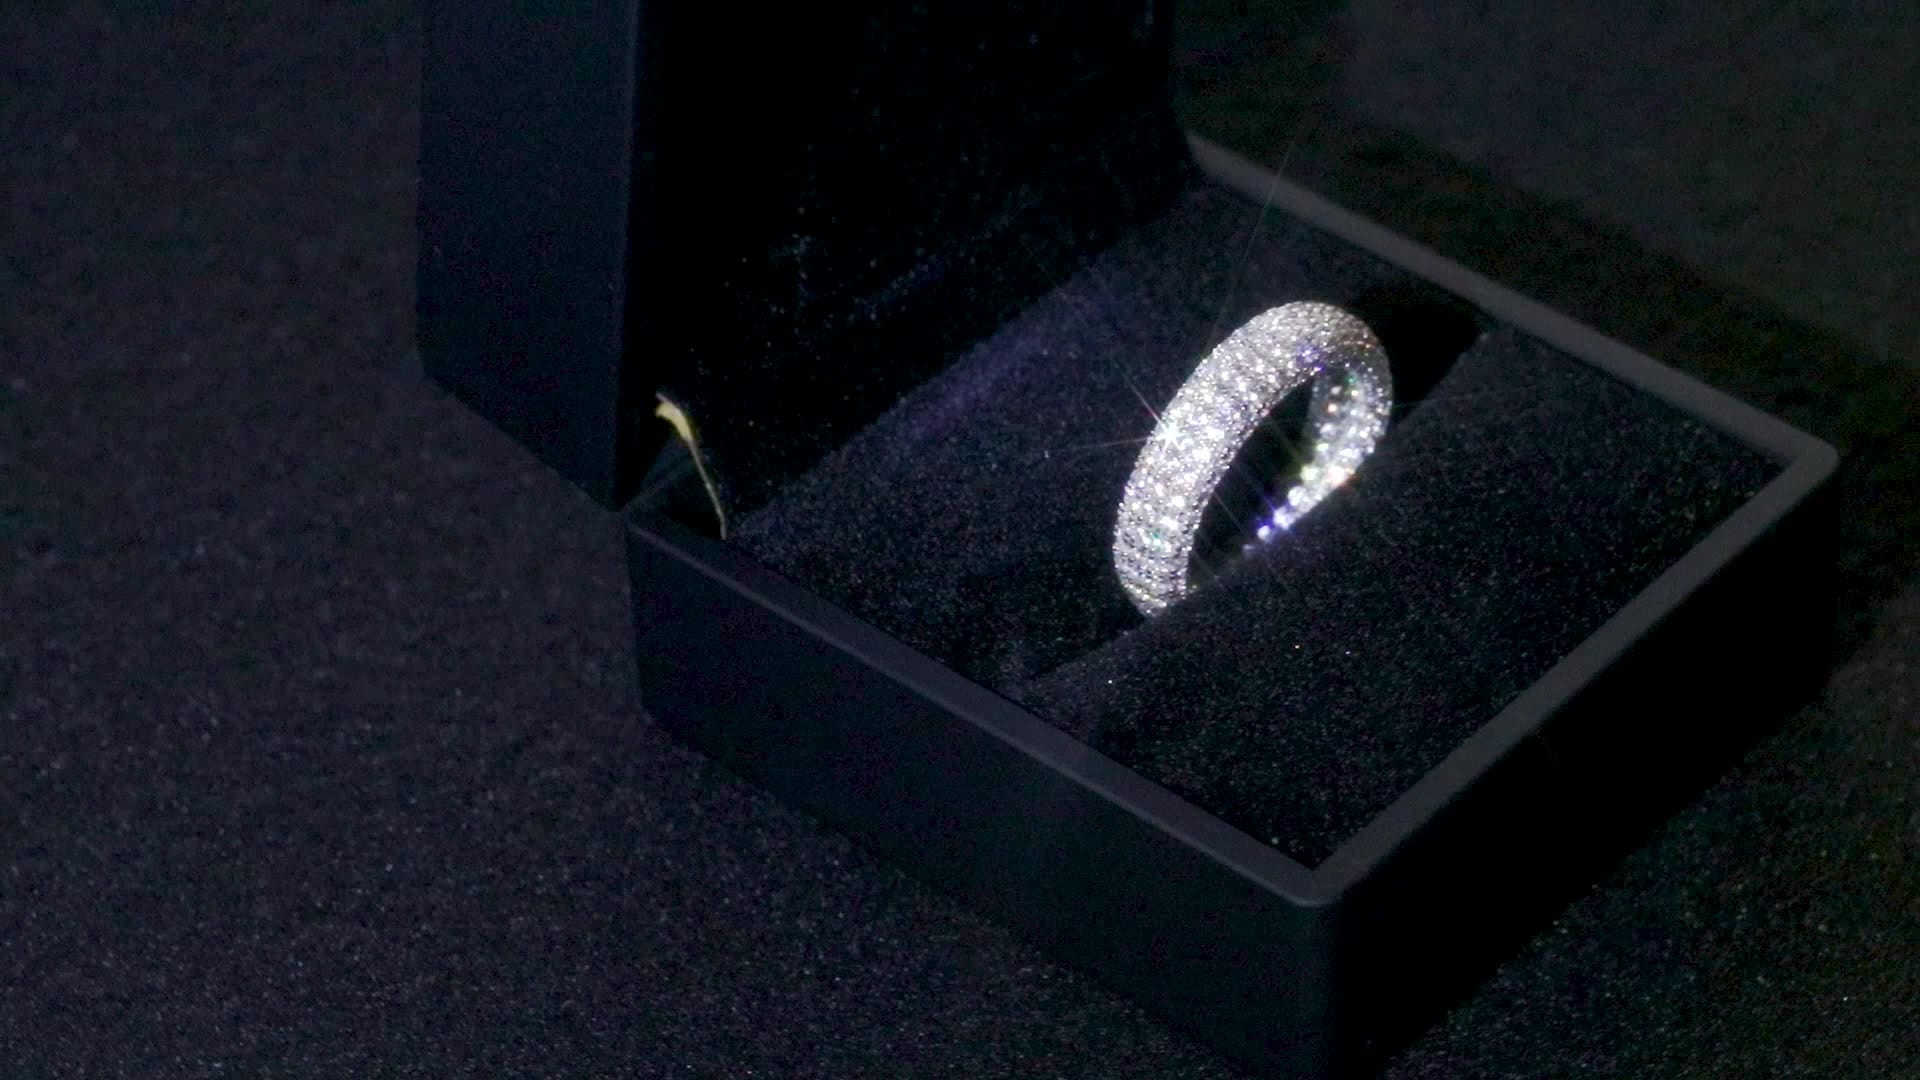 18K Gold Filled  Hip Hop Ring - Full Pave Zircon Diamond